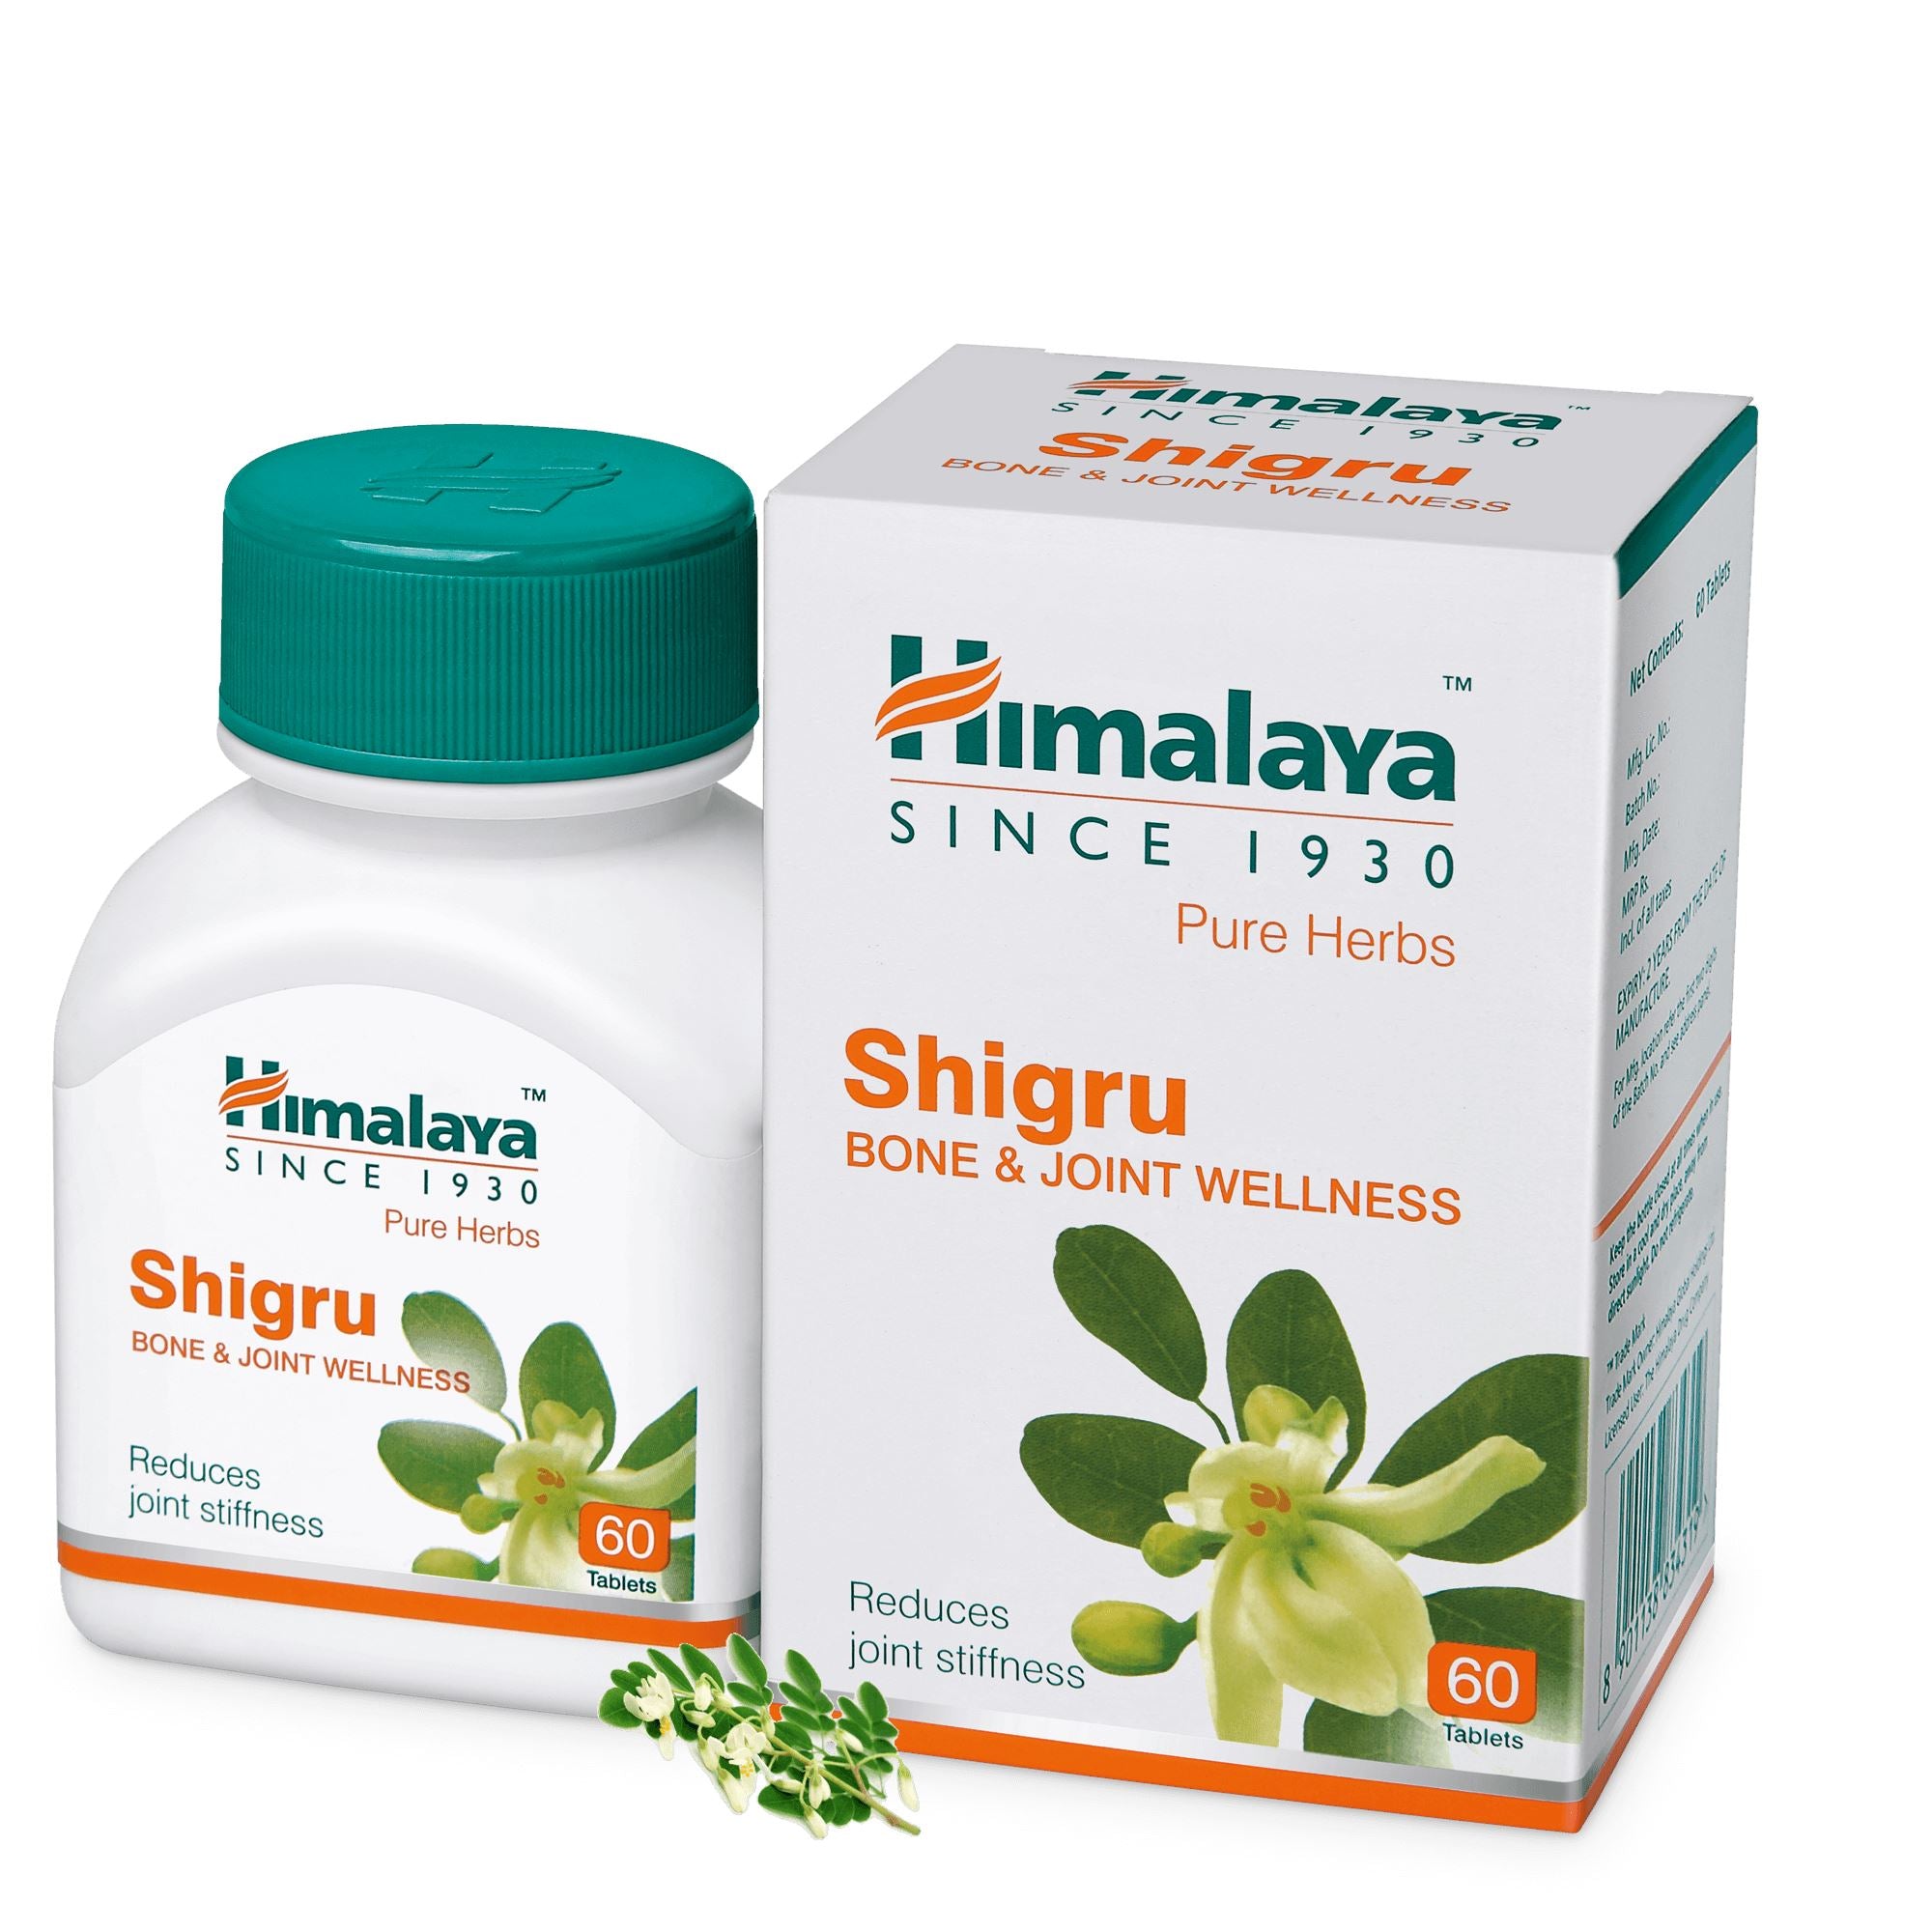 Himalaya Shigru - Reduces joint stiffness